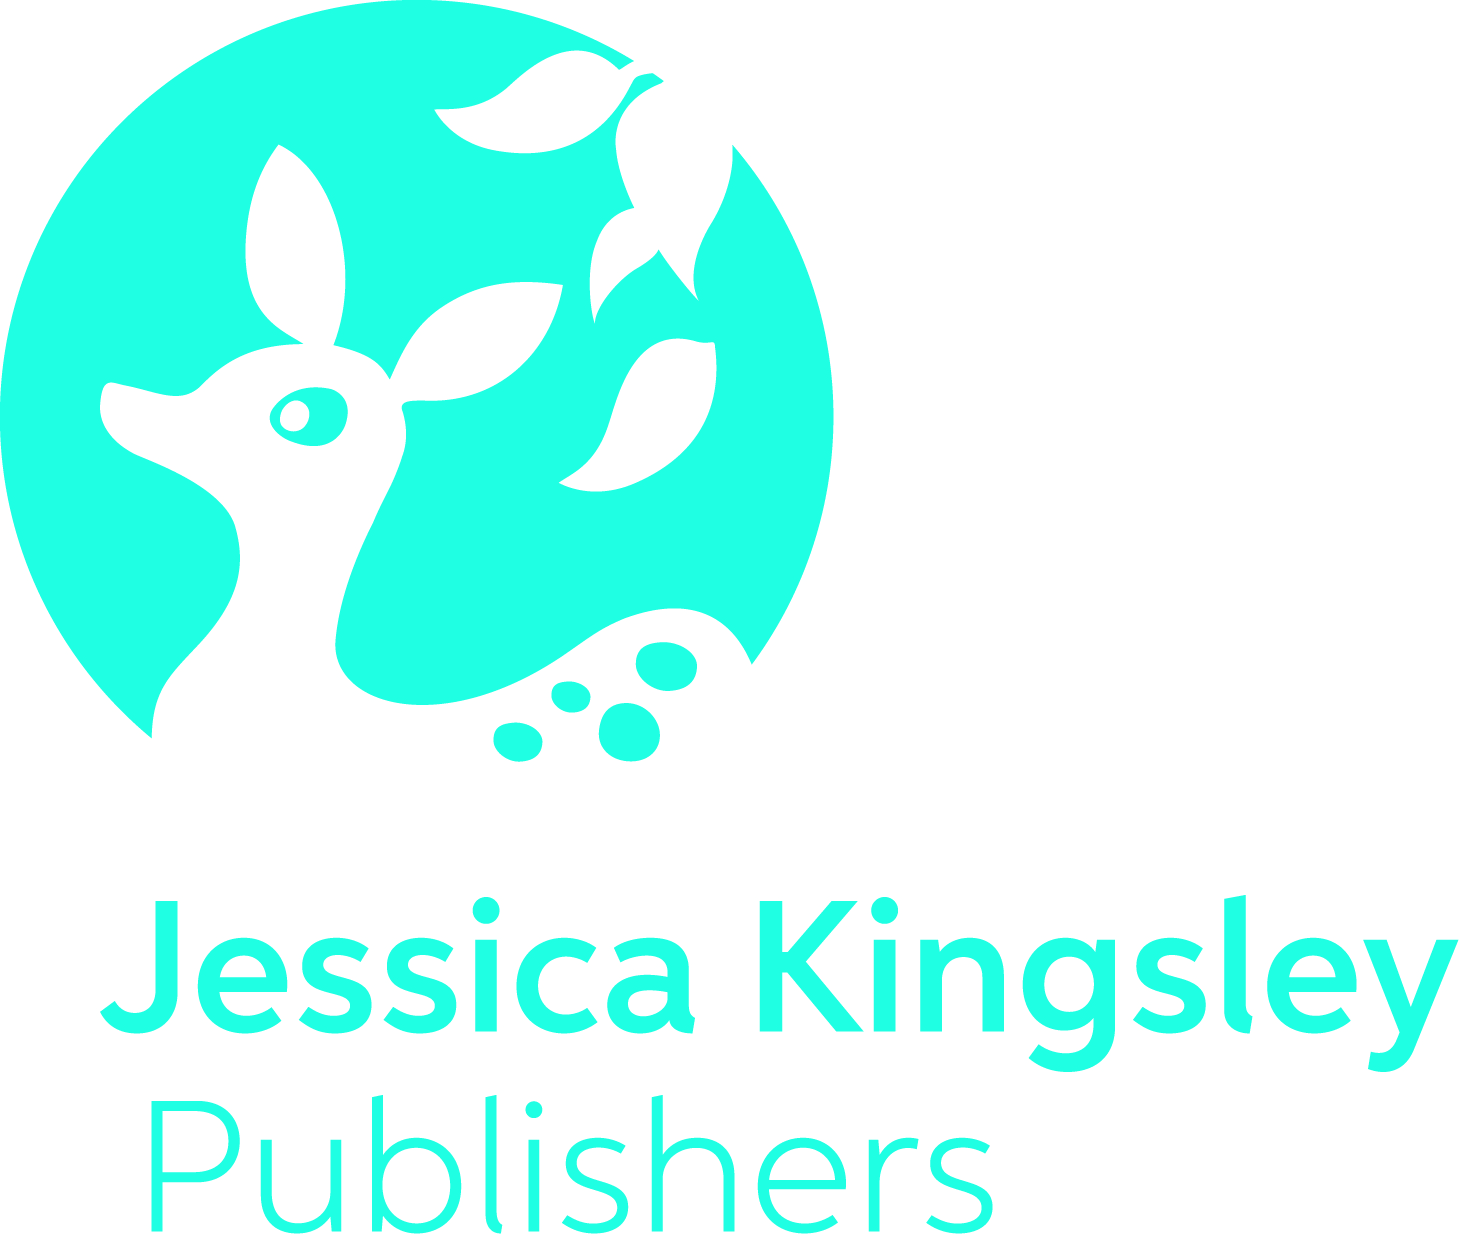 Jessica Kingsley Publishers